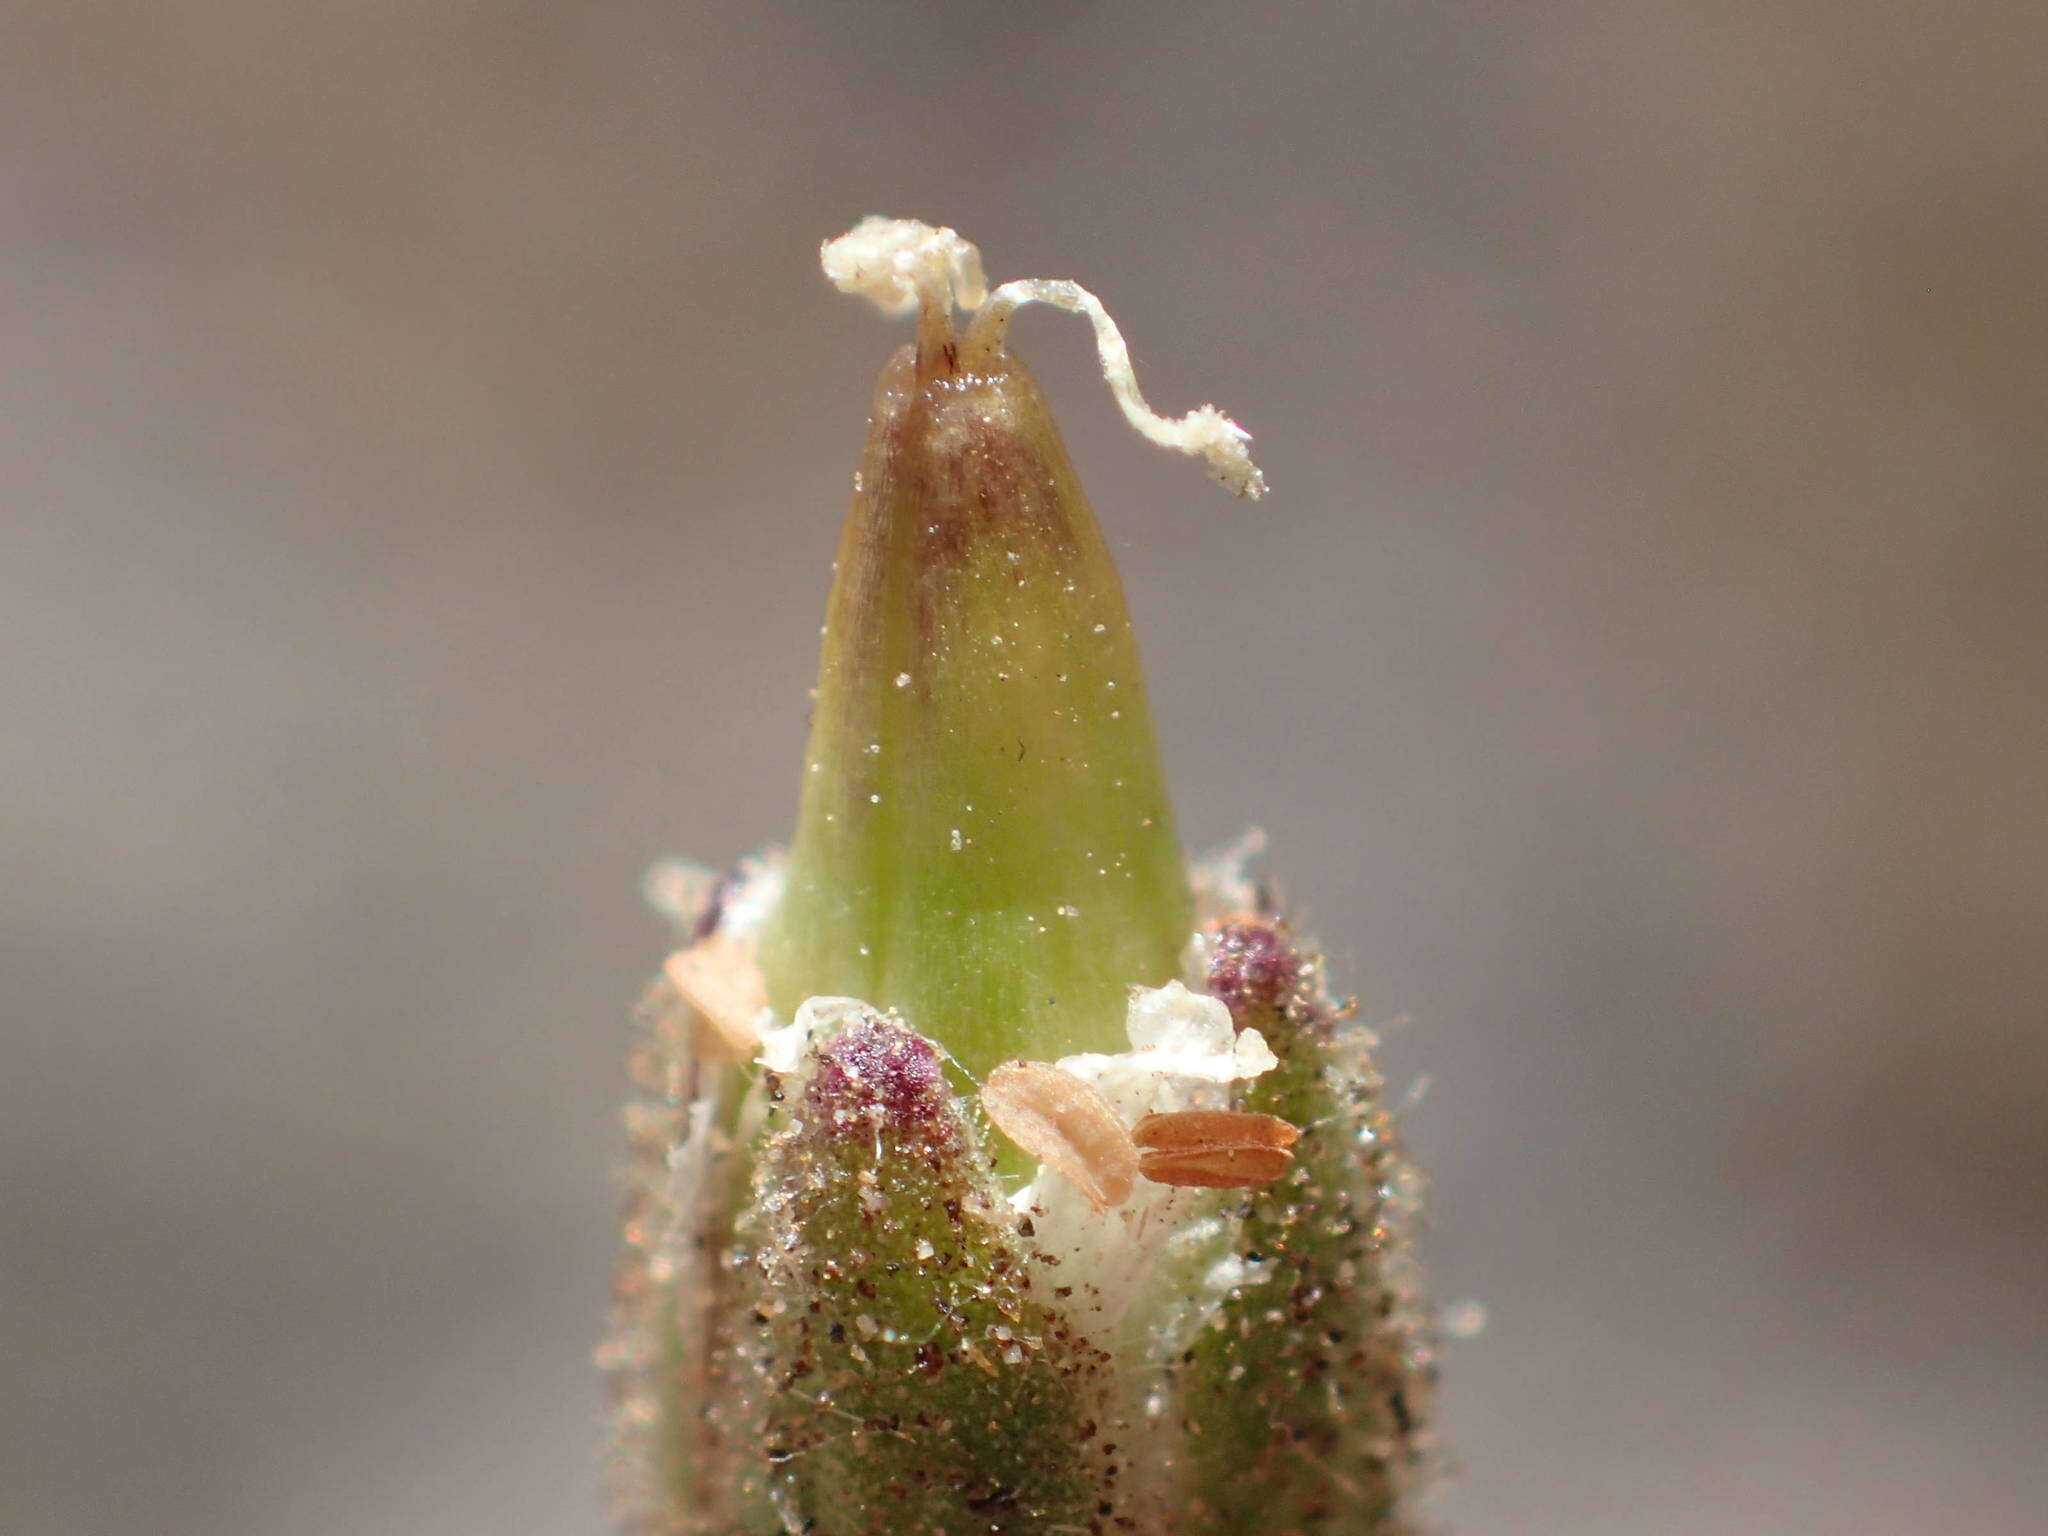 Image of Cherleria capillacea (All.) A. J. Moore & Dillenb.